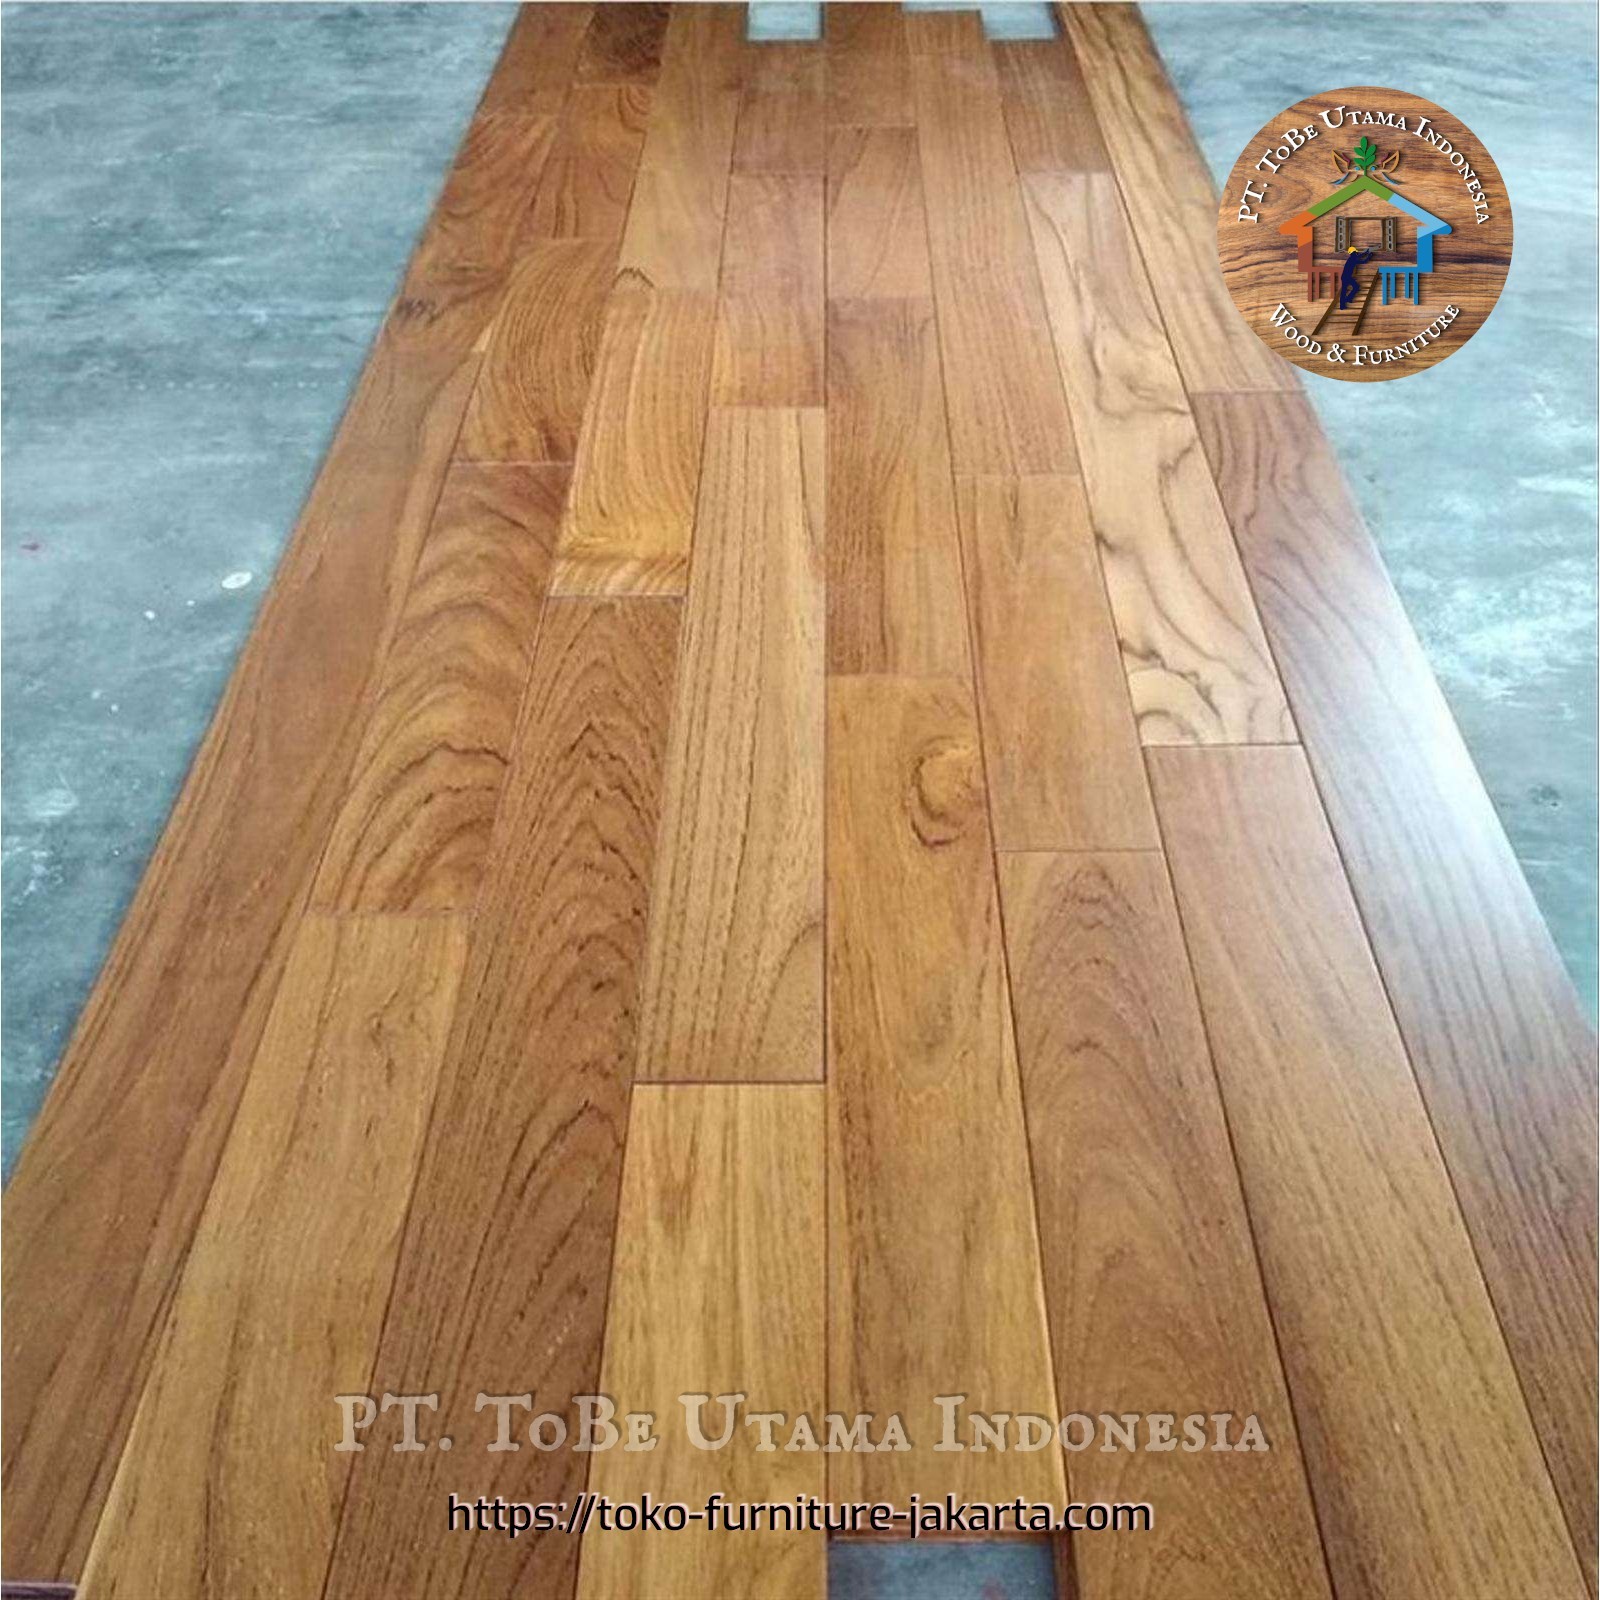 Planks & Decking/Flooring: Flooring Teakwood Finished made of teakwood (image 1 of 1).